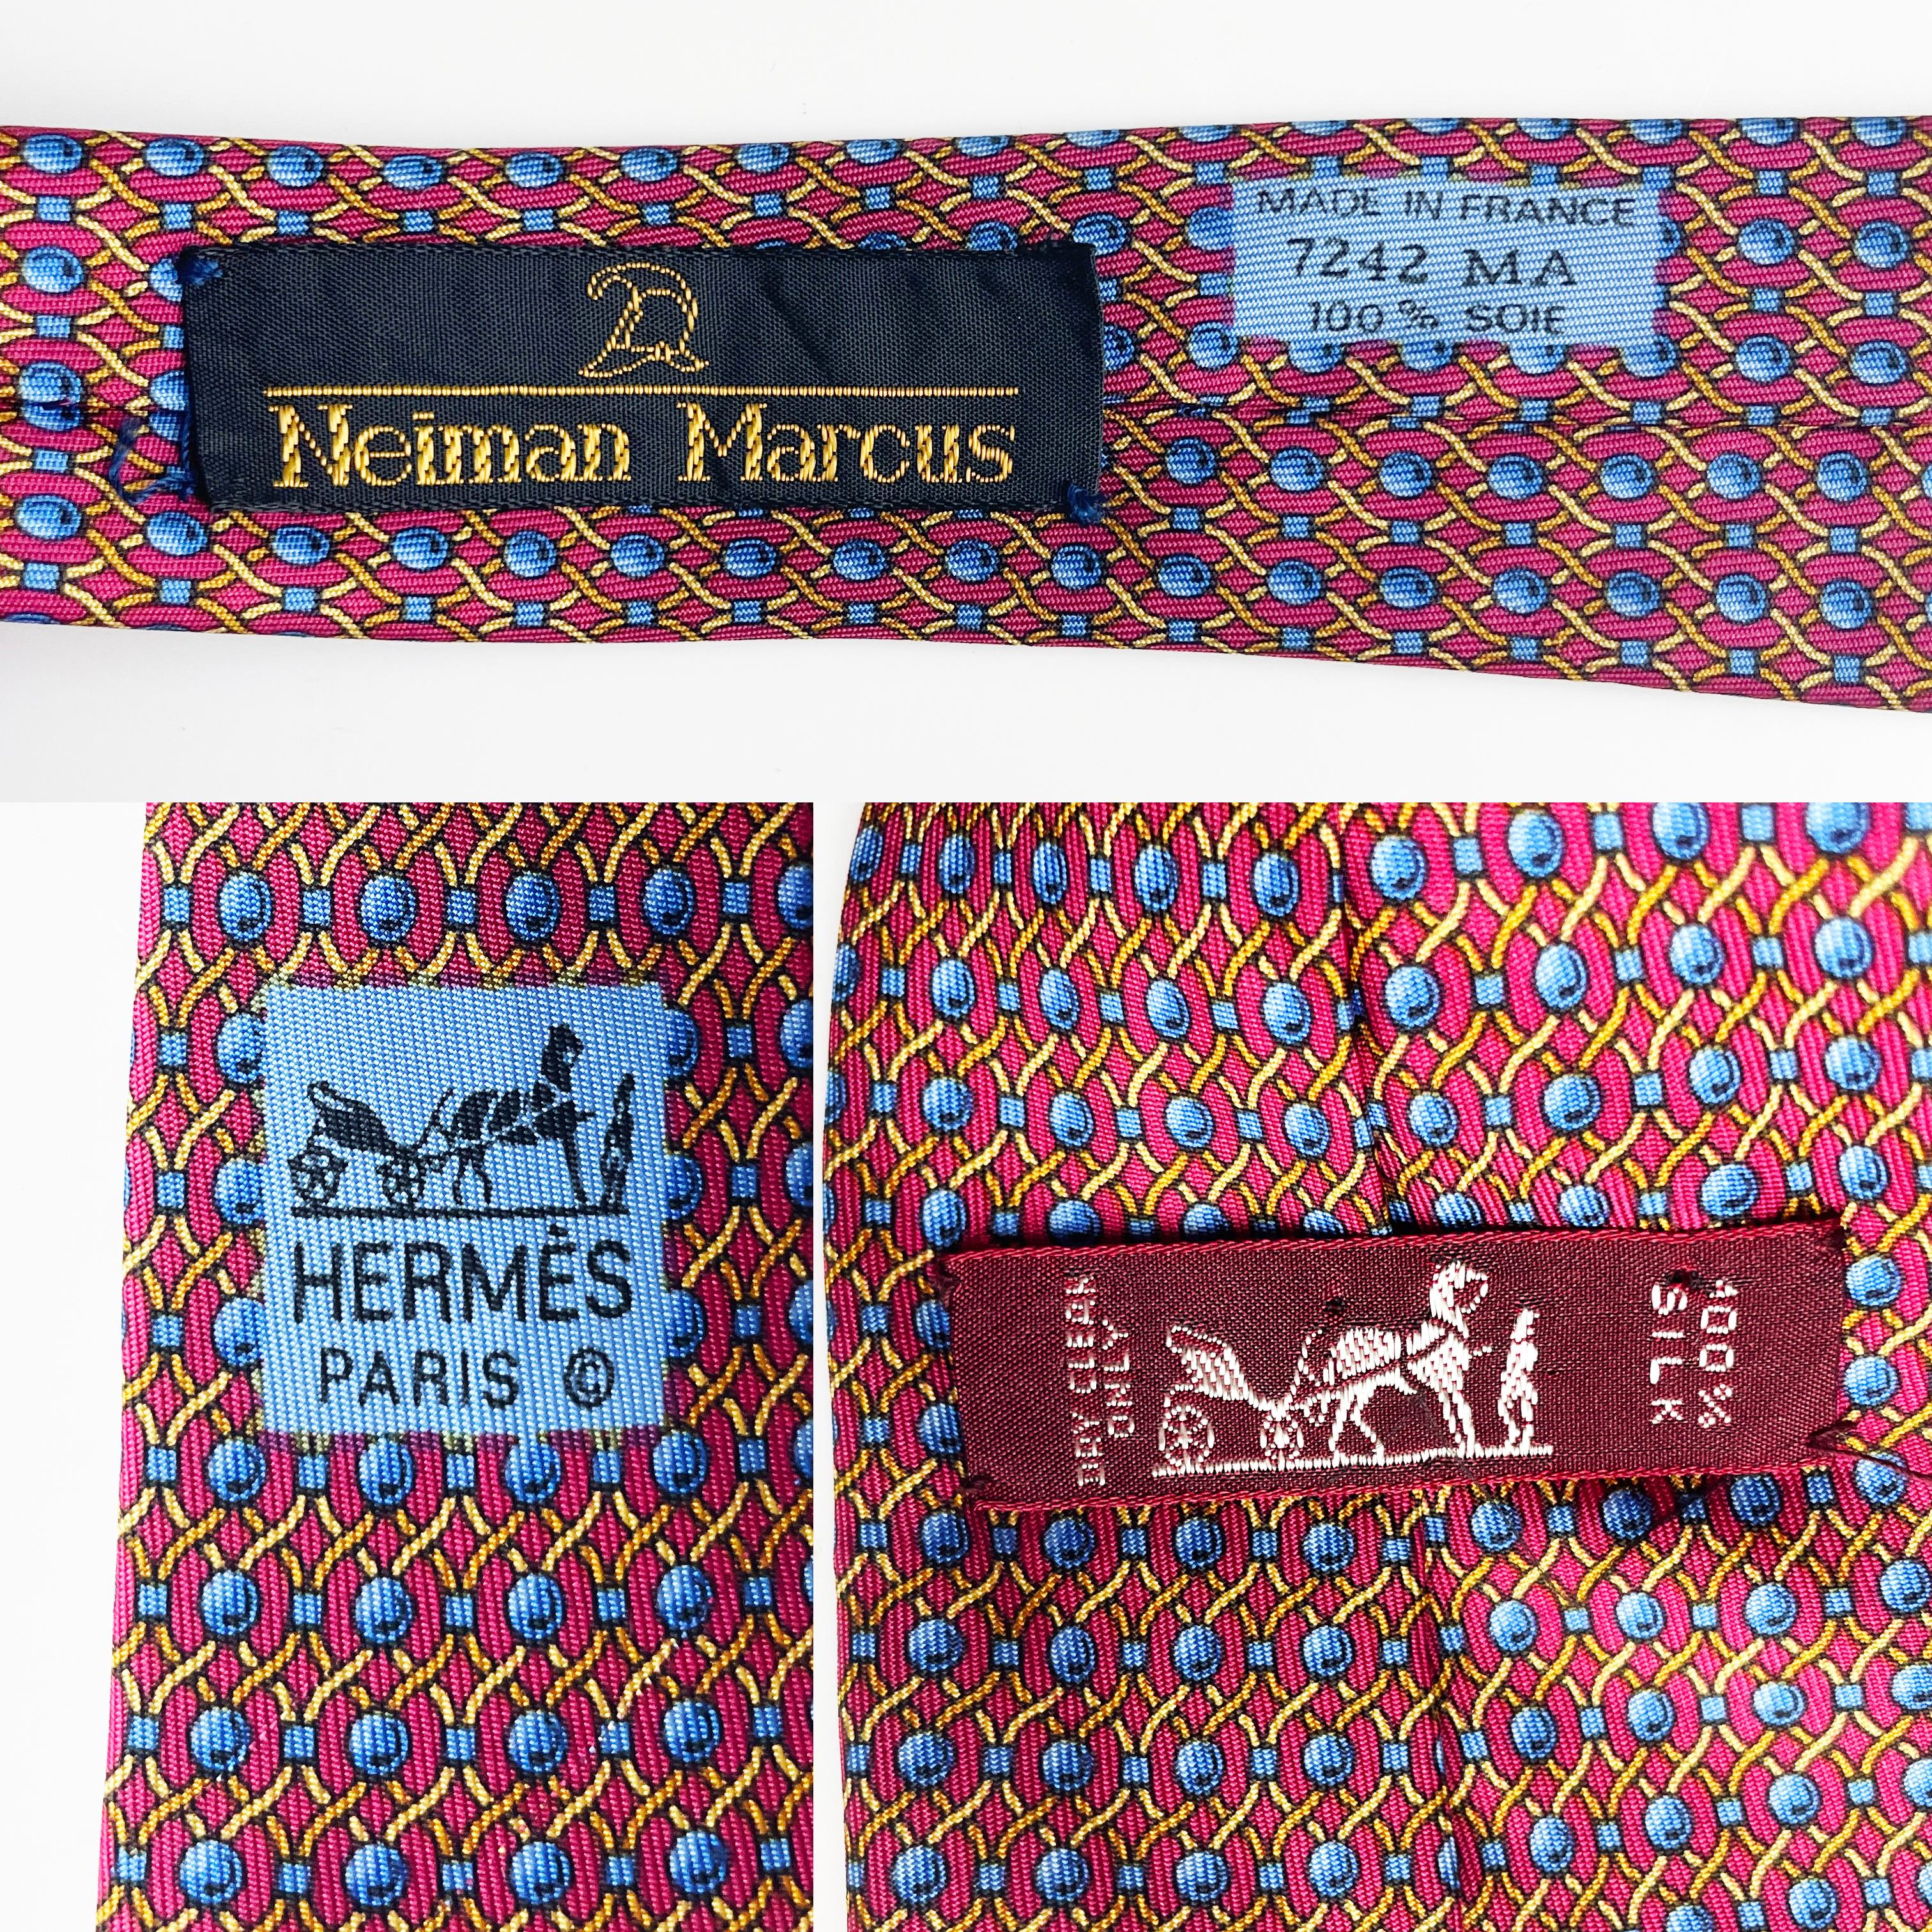 Men's Hermes Necktie Silk Abstract Rope Print Style 7242 MA Vintage Luxury Menswear 